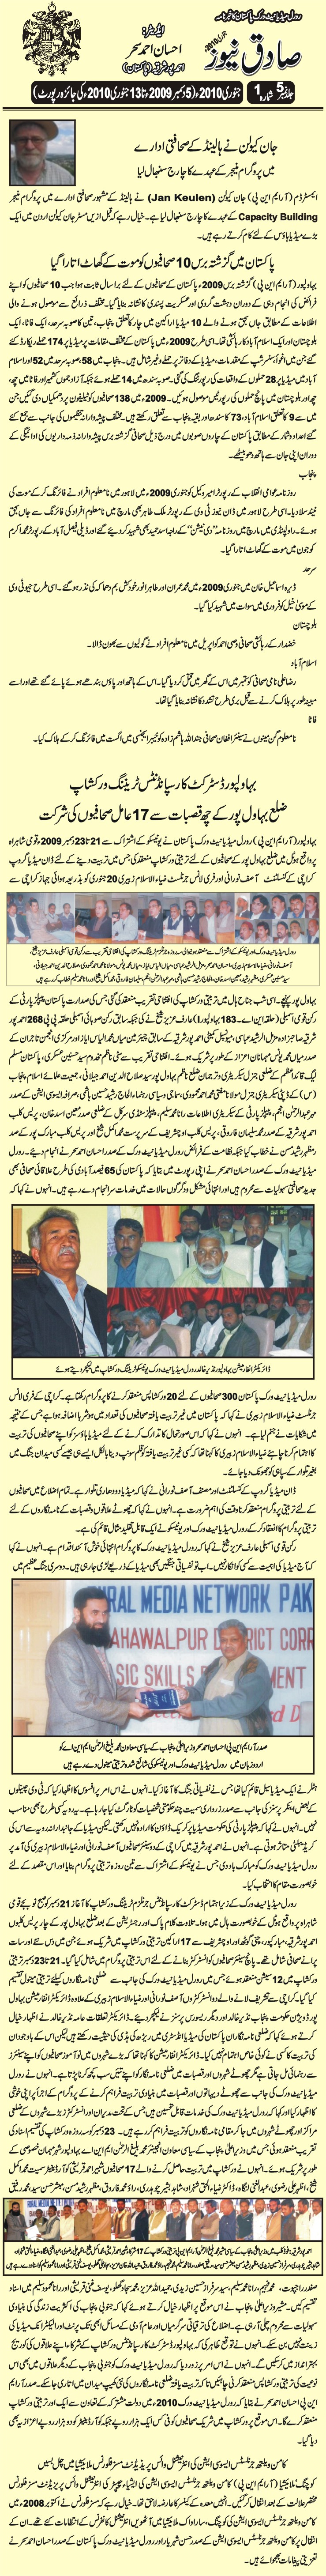 Sadiq News January 2010